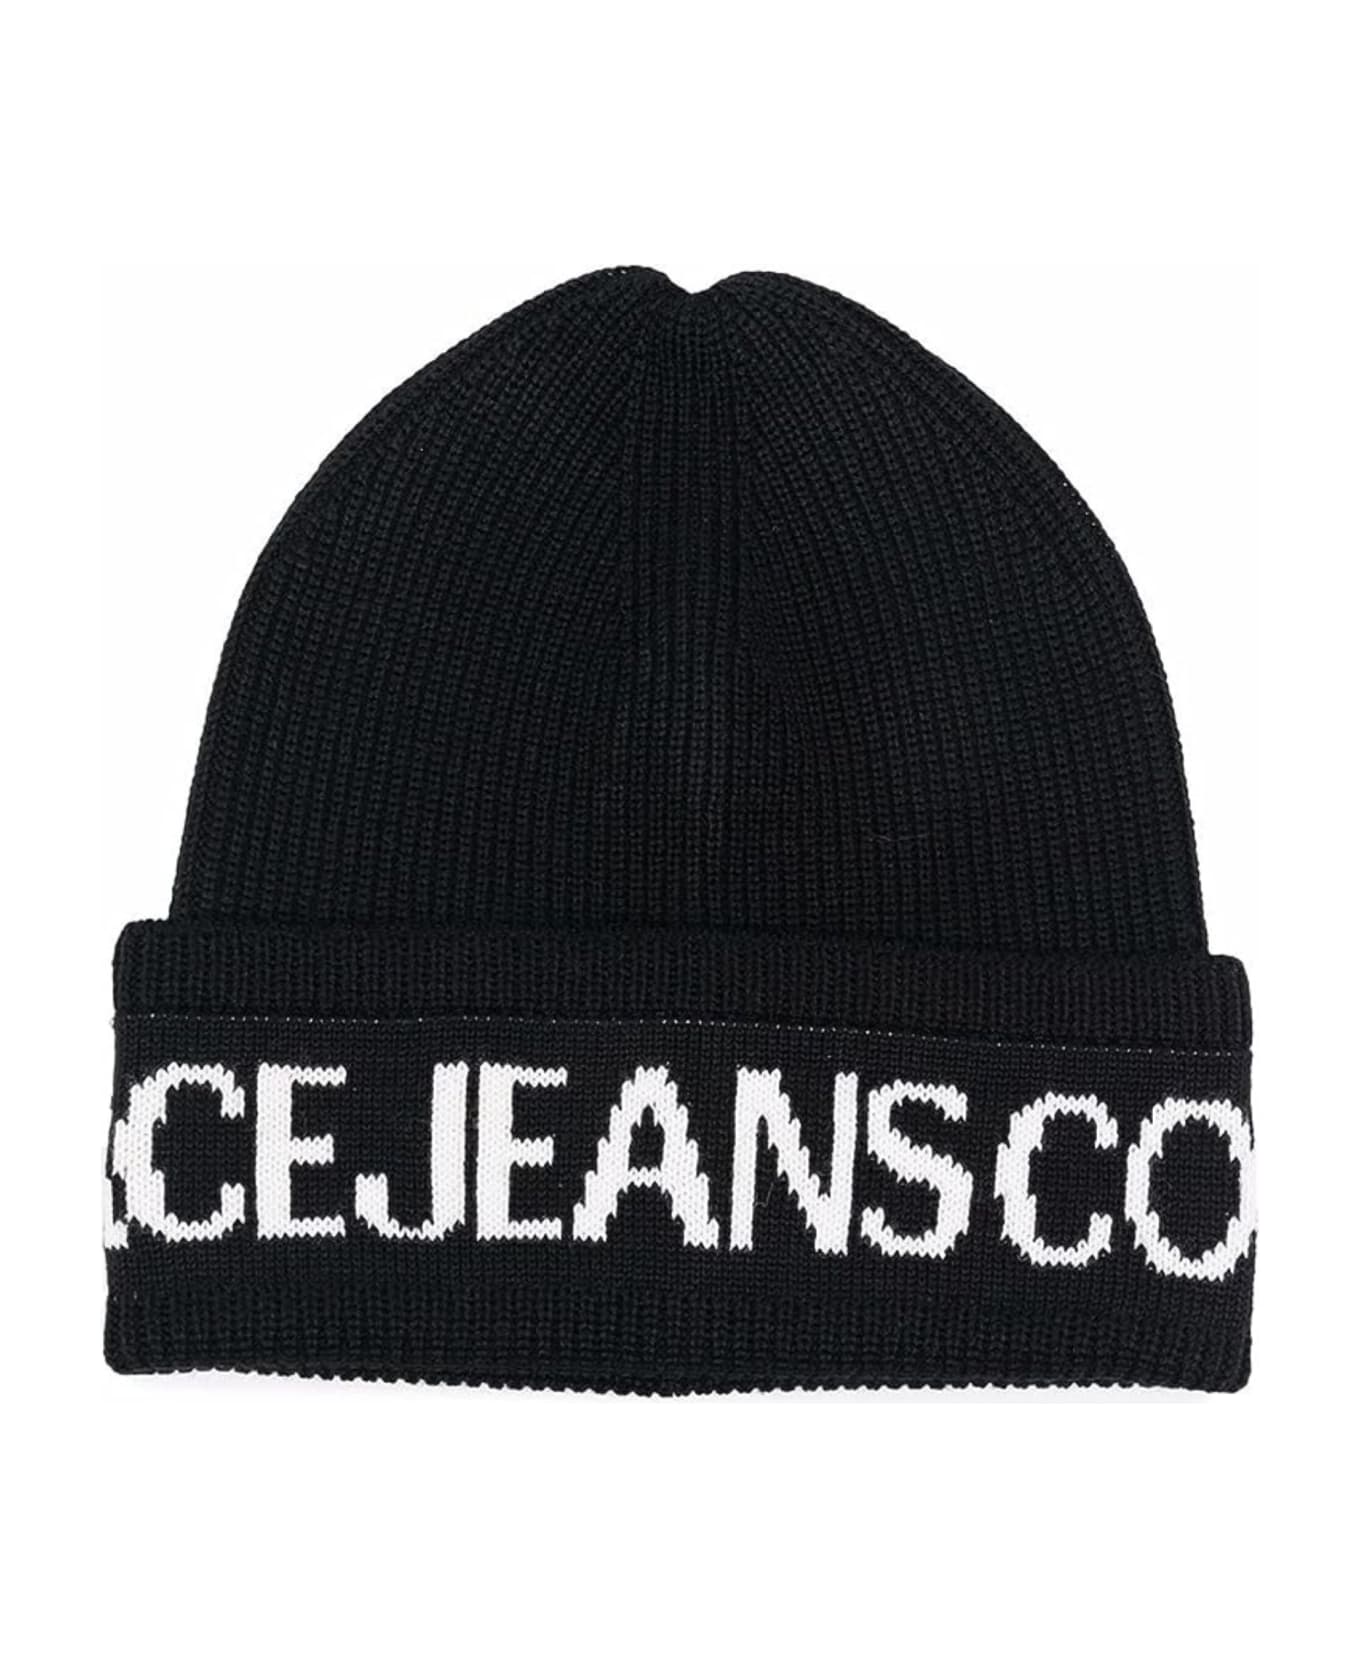 Versace Jeans Couture Hat - Black 帽子